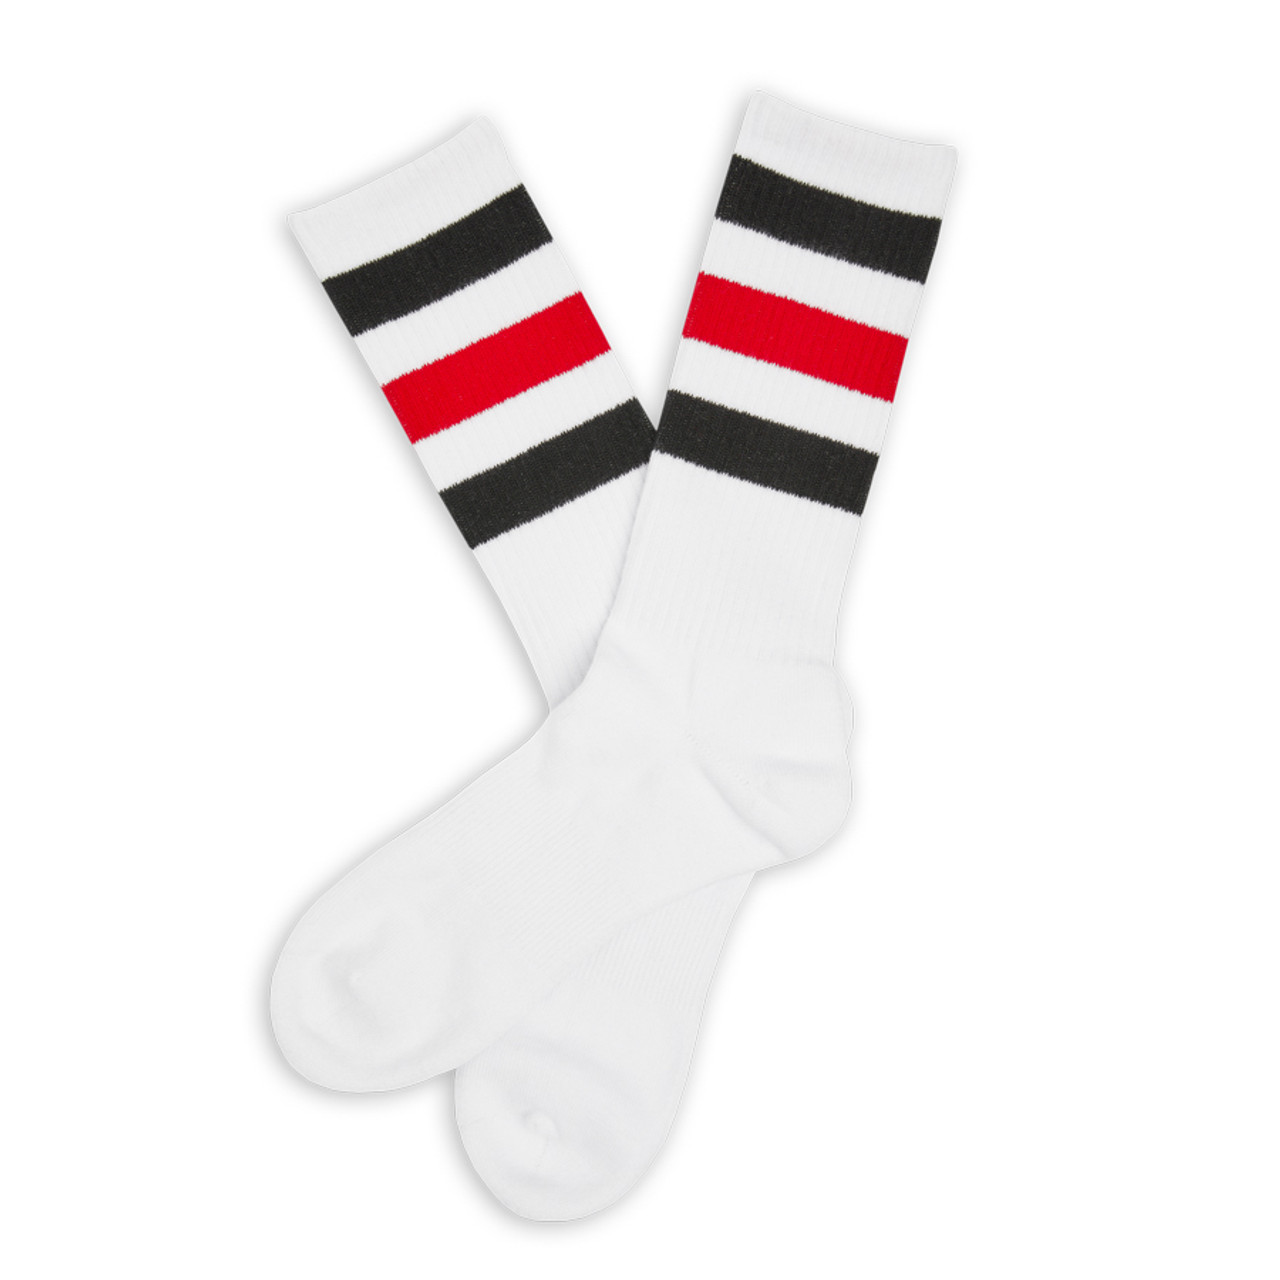 Red / Black Casual Socks 4 Pack